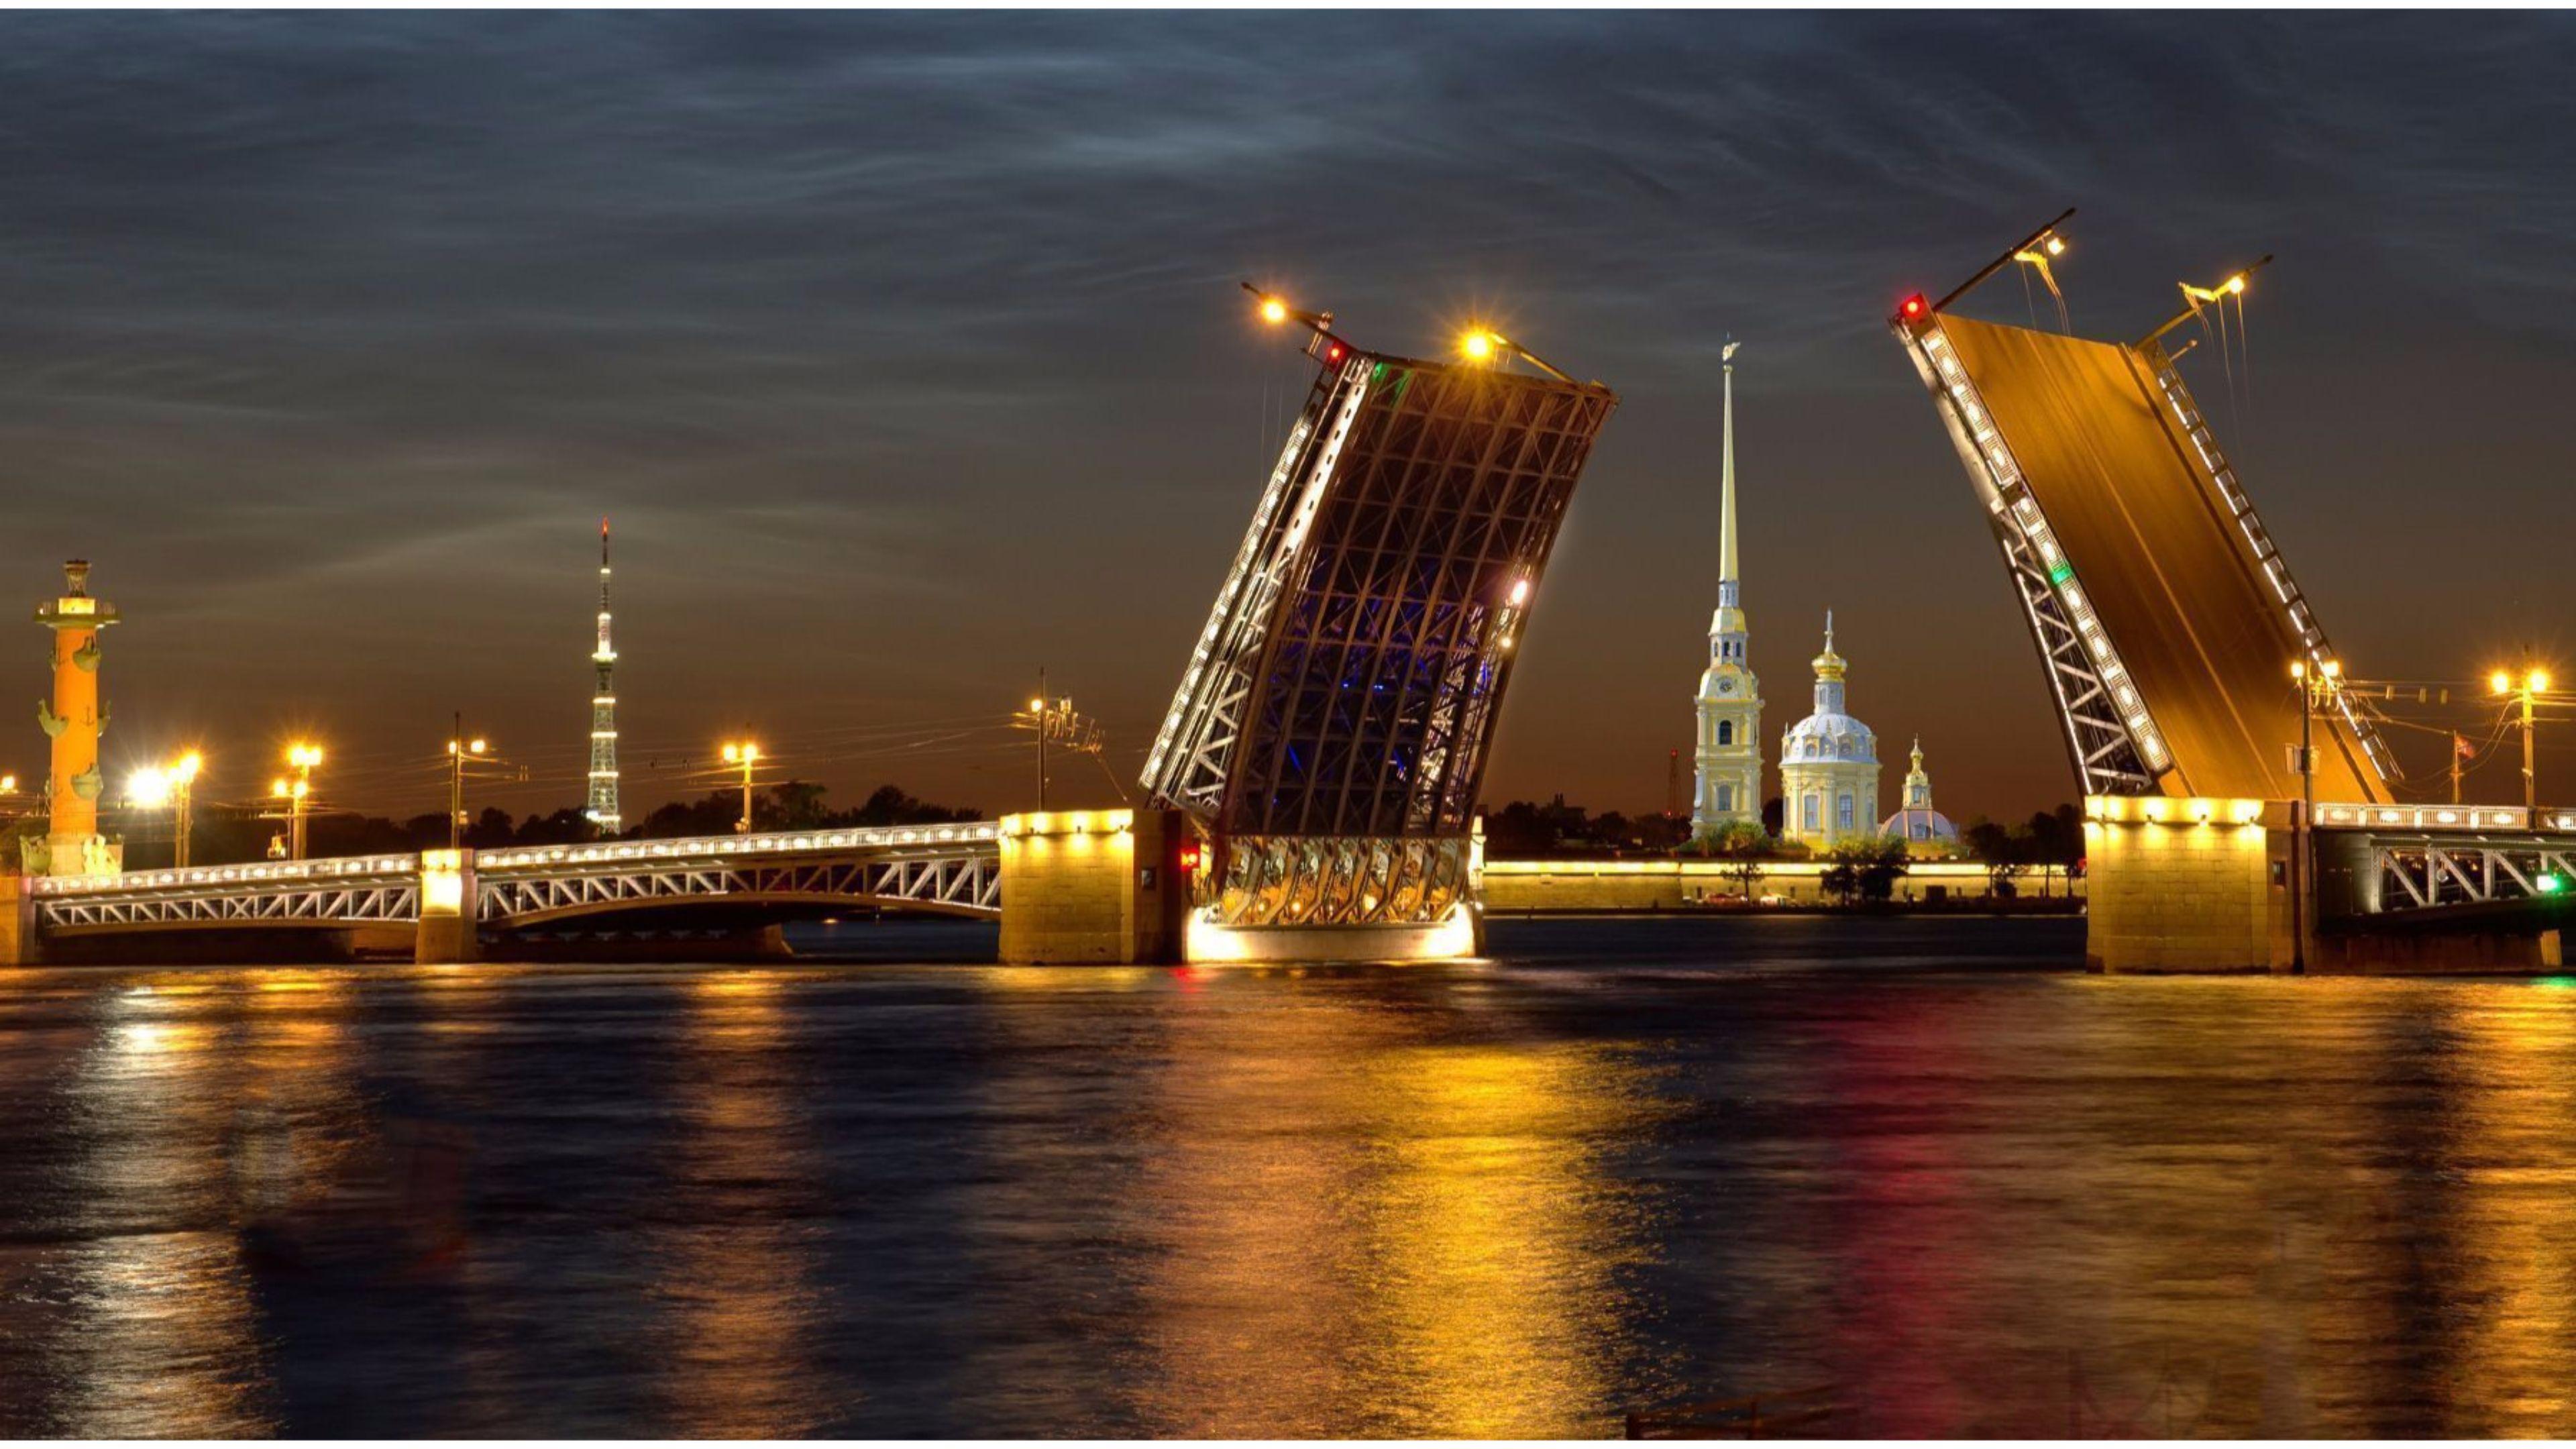 New St Petersburg, Russia 4K Wallpaper. Free 4K Wallpaper